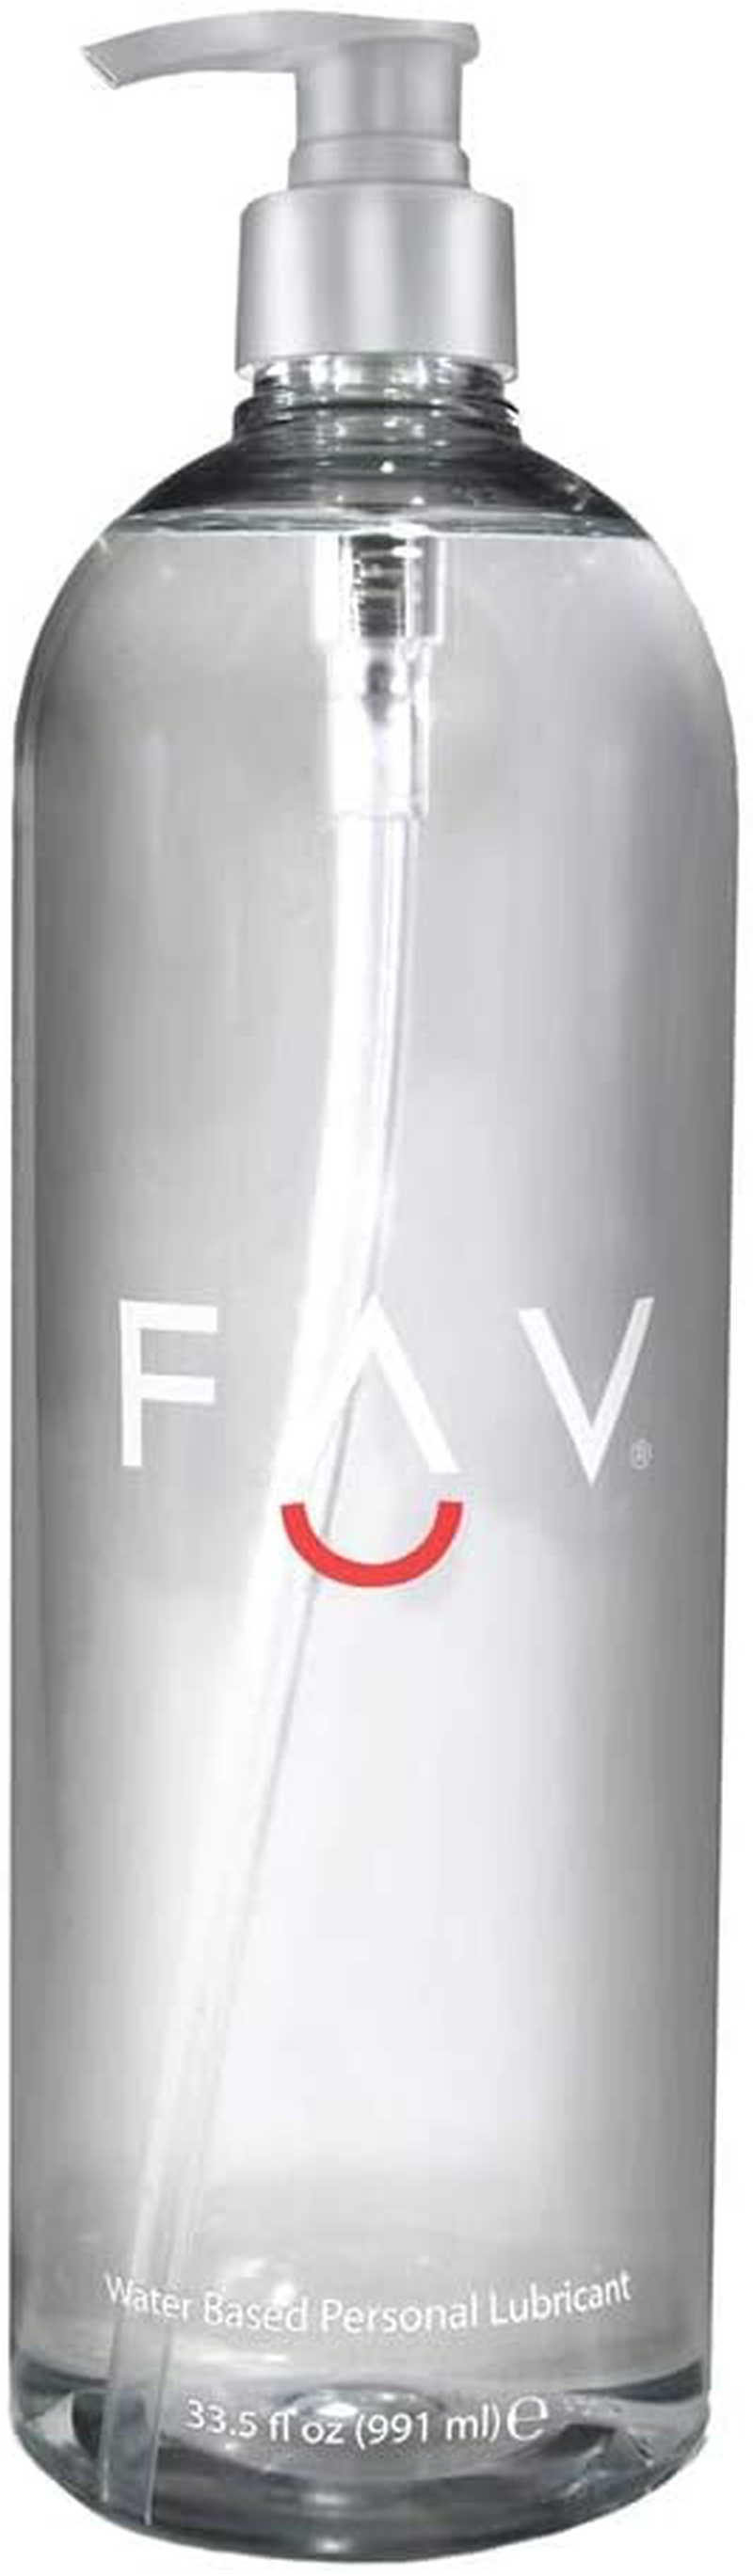 FAV Water Based Luxury Personal Lubricant, 33.5 Fl Oz